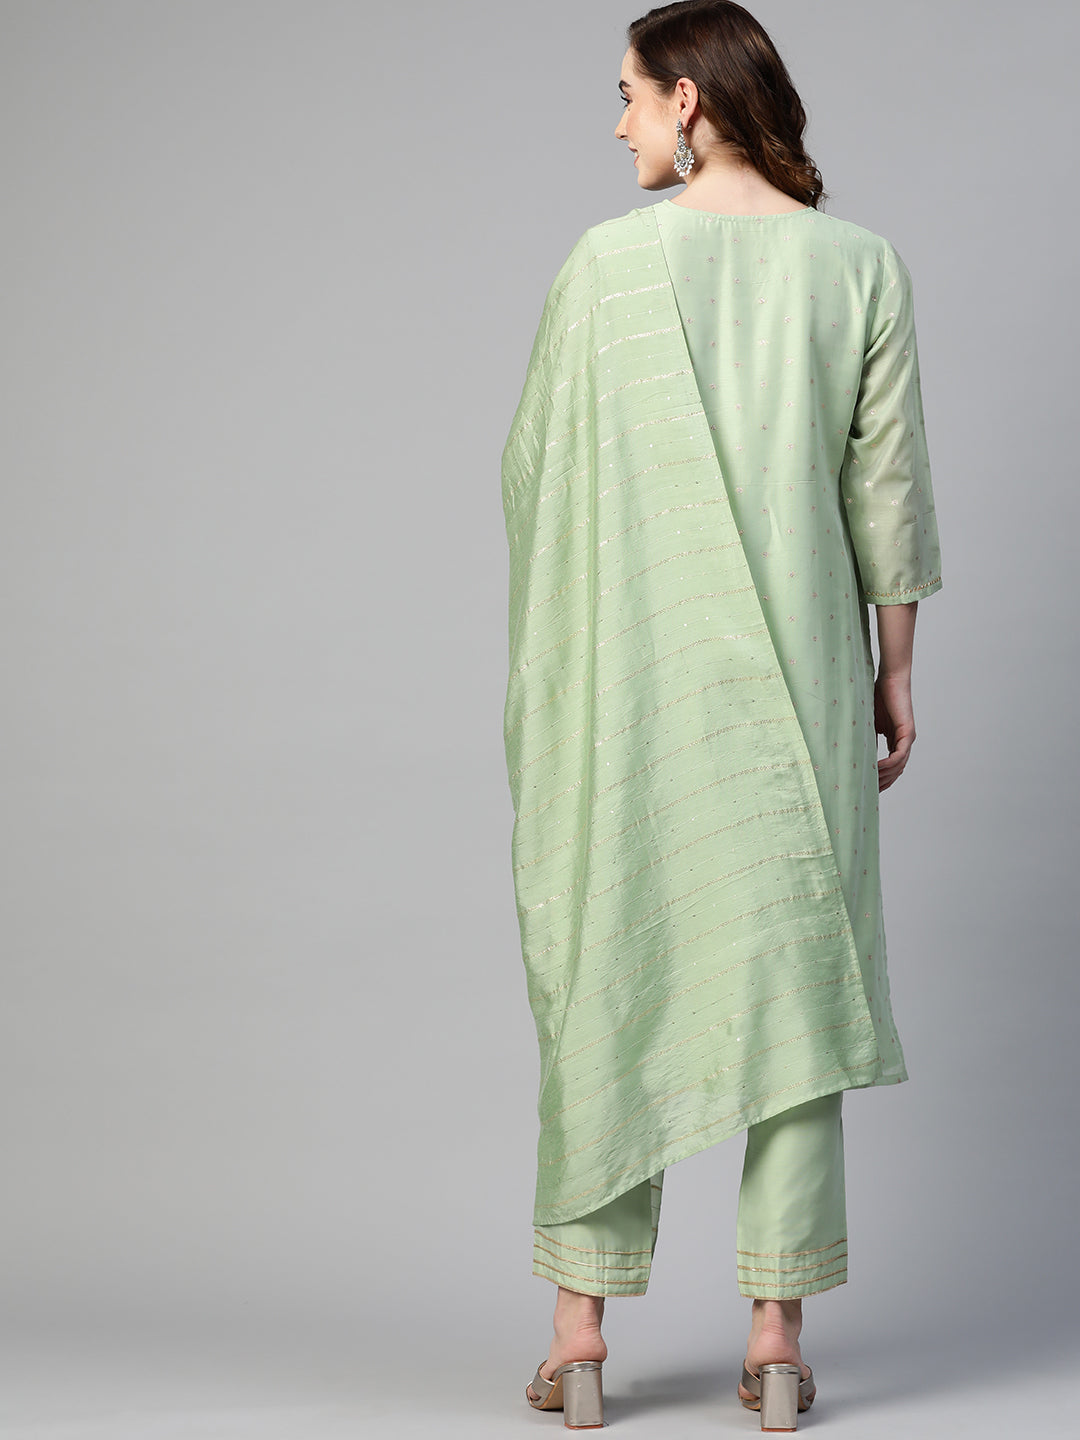 Sunehri Women's Chanderi Silk Green Embroidered A-Line Kurta Trouser Dupatta Set